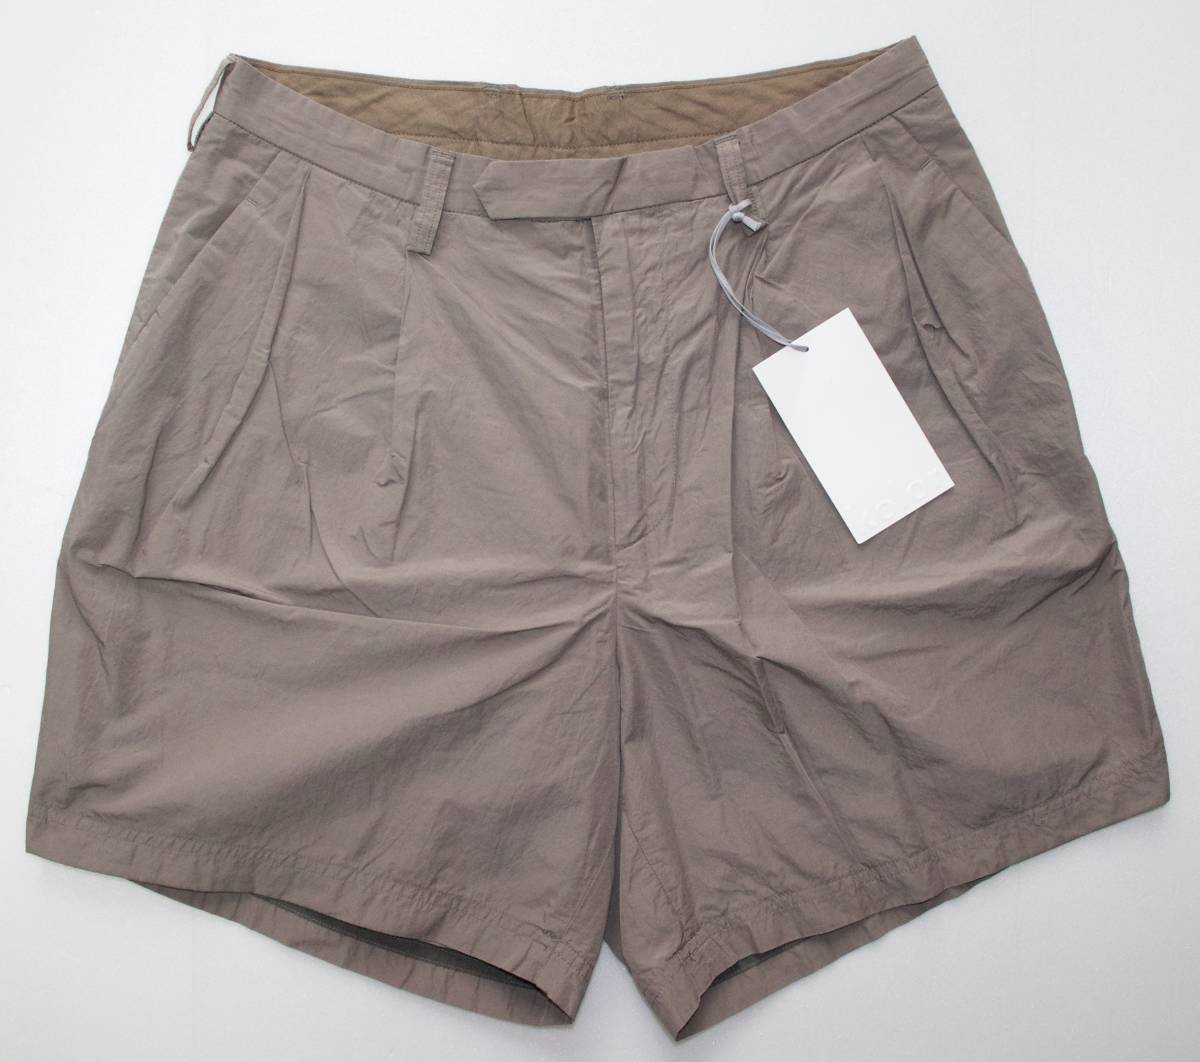  regular price 30000 new goods genuine article kolor color flax shorts 1 13SCM-P14109 1018 nb